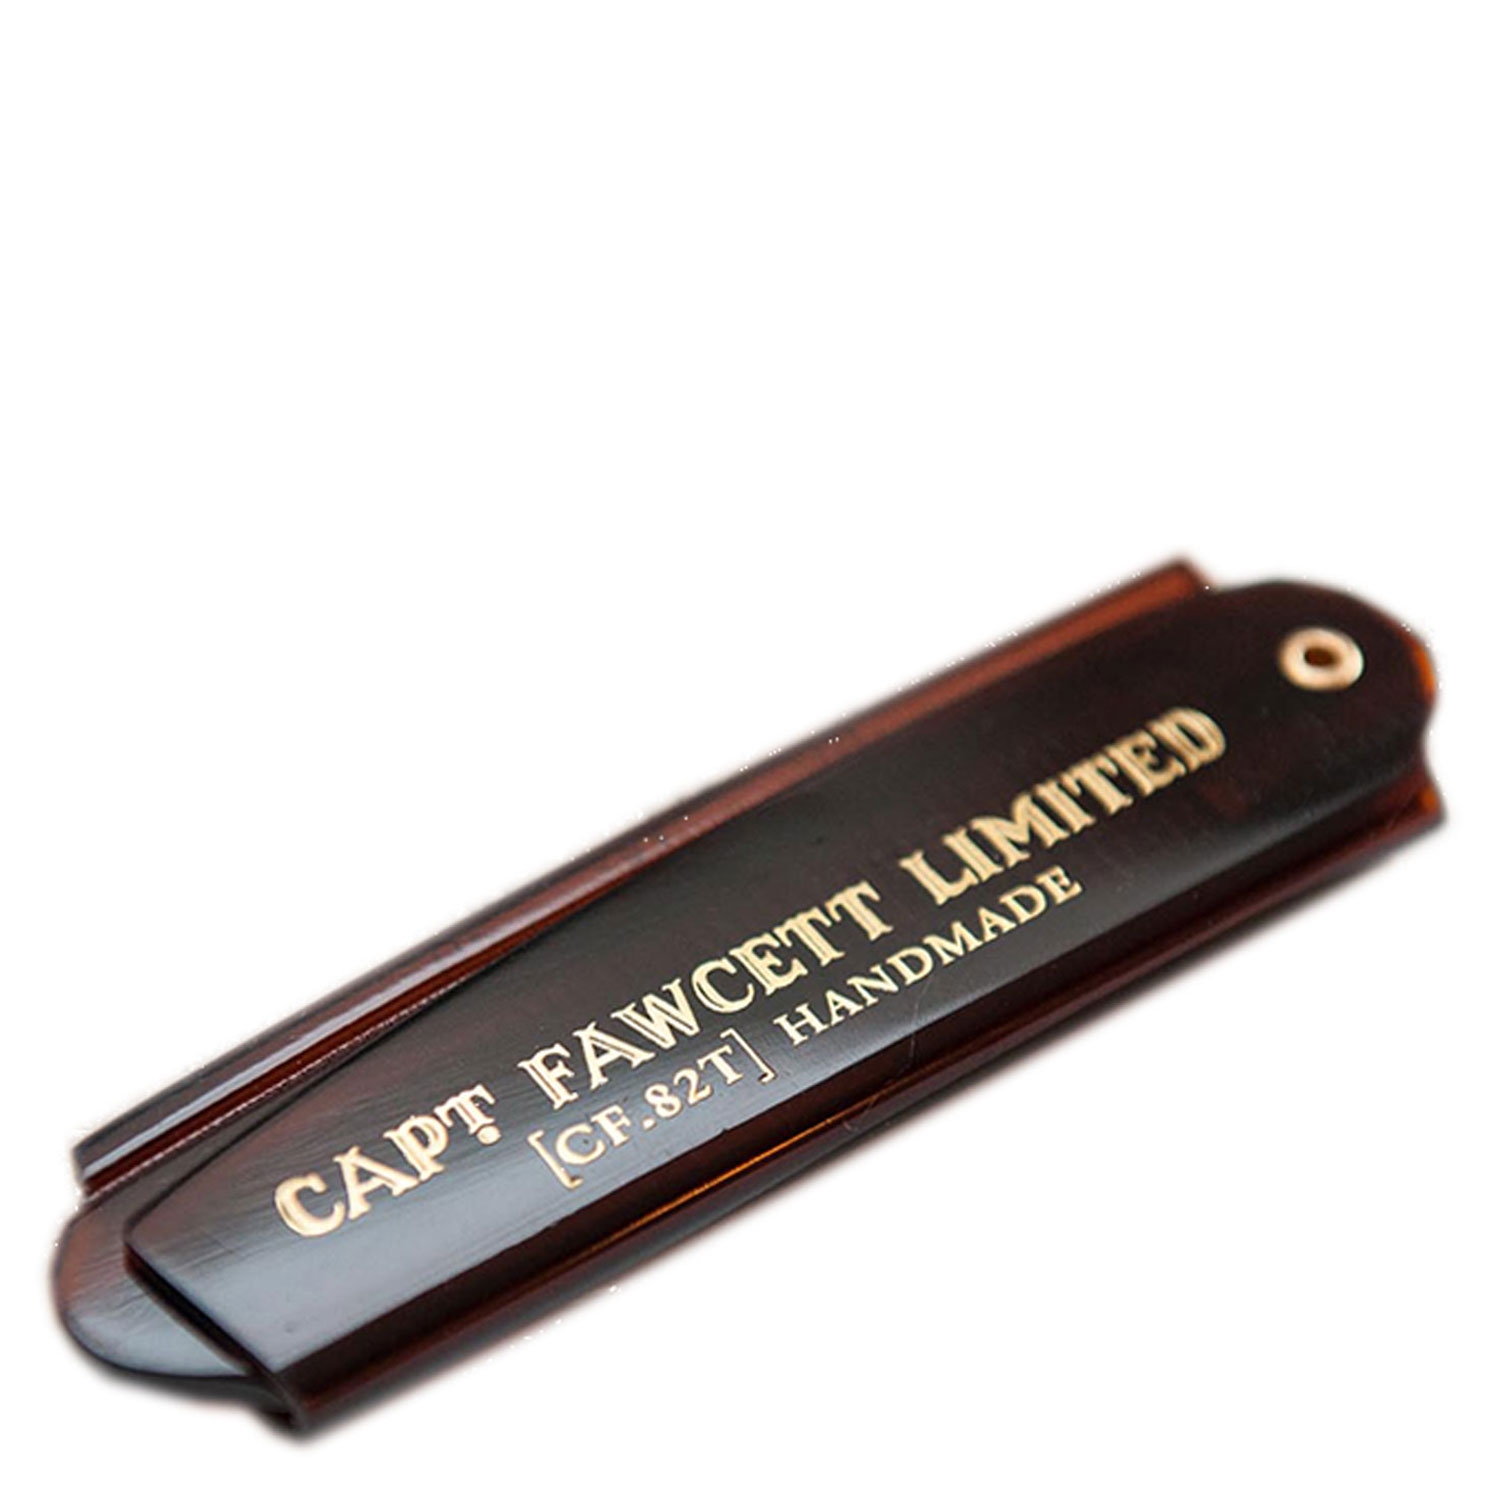 Produktbild von Capt. Fawcett Tools - Folding Pocket Beard Comb